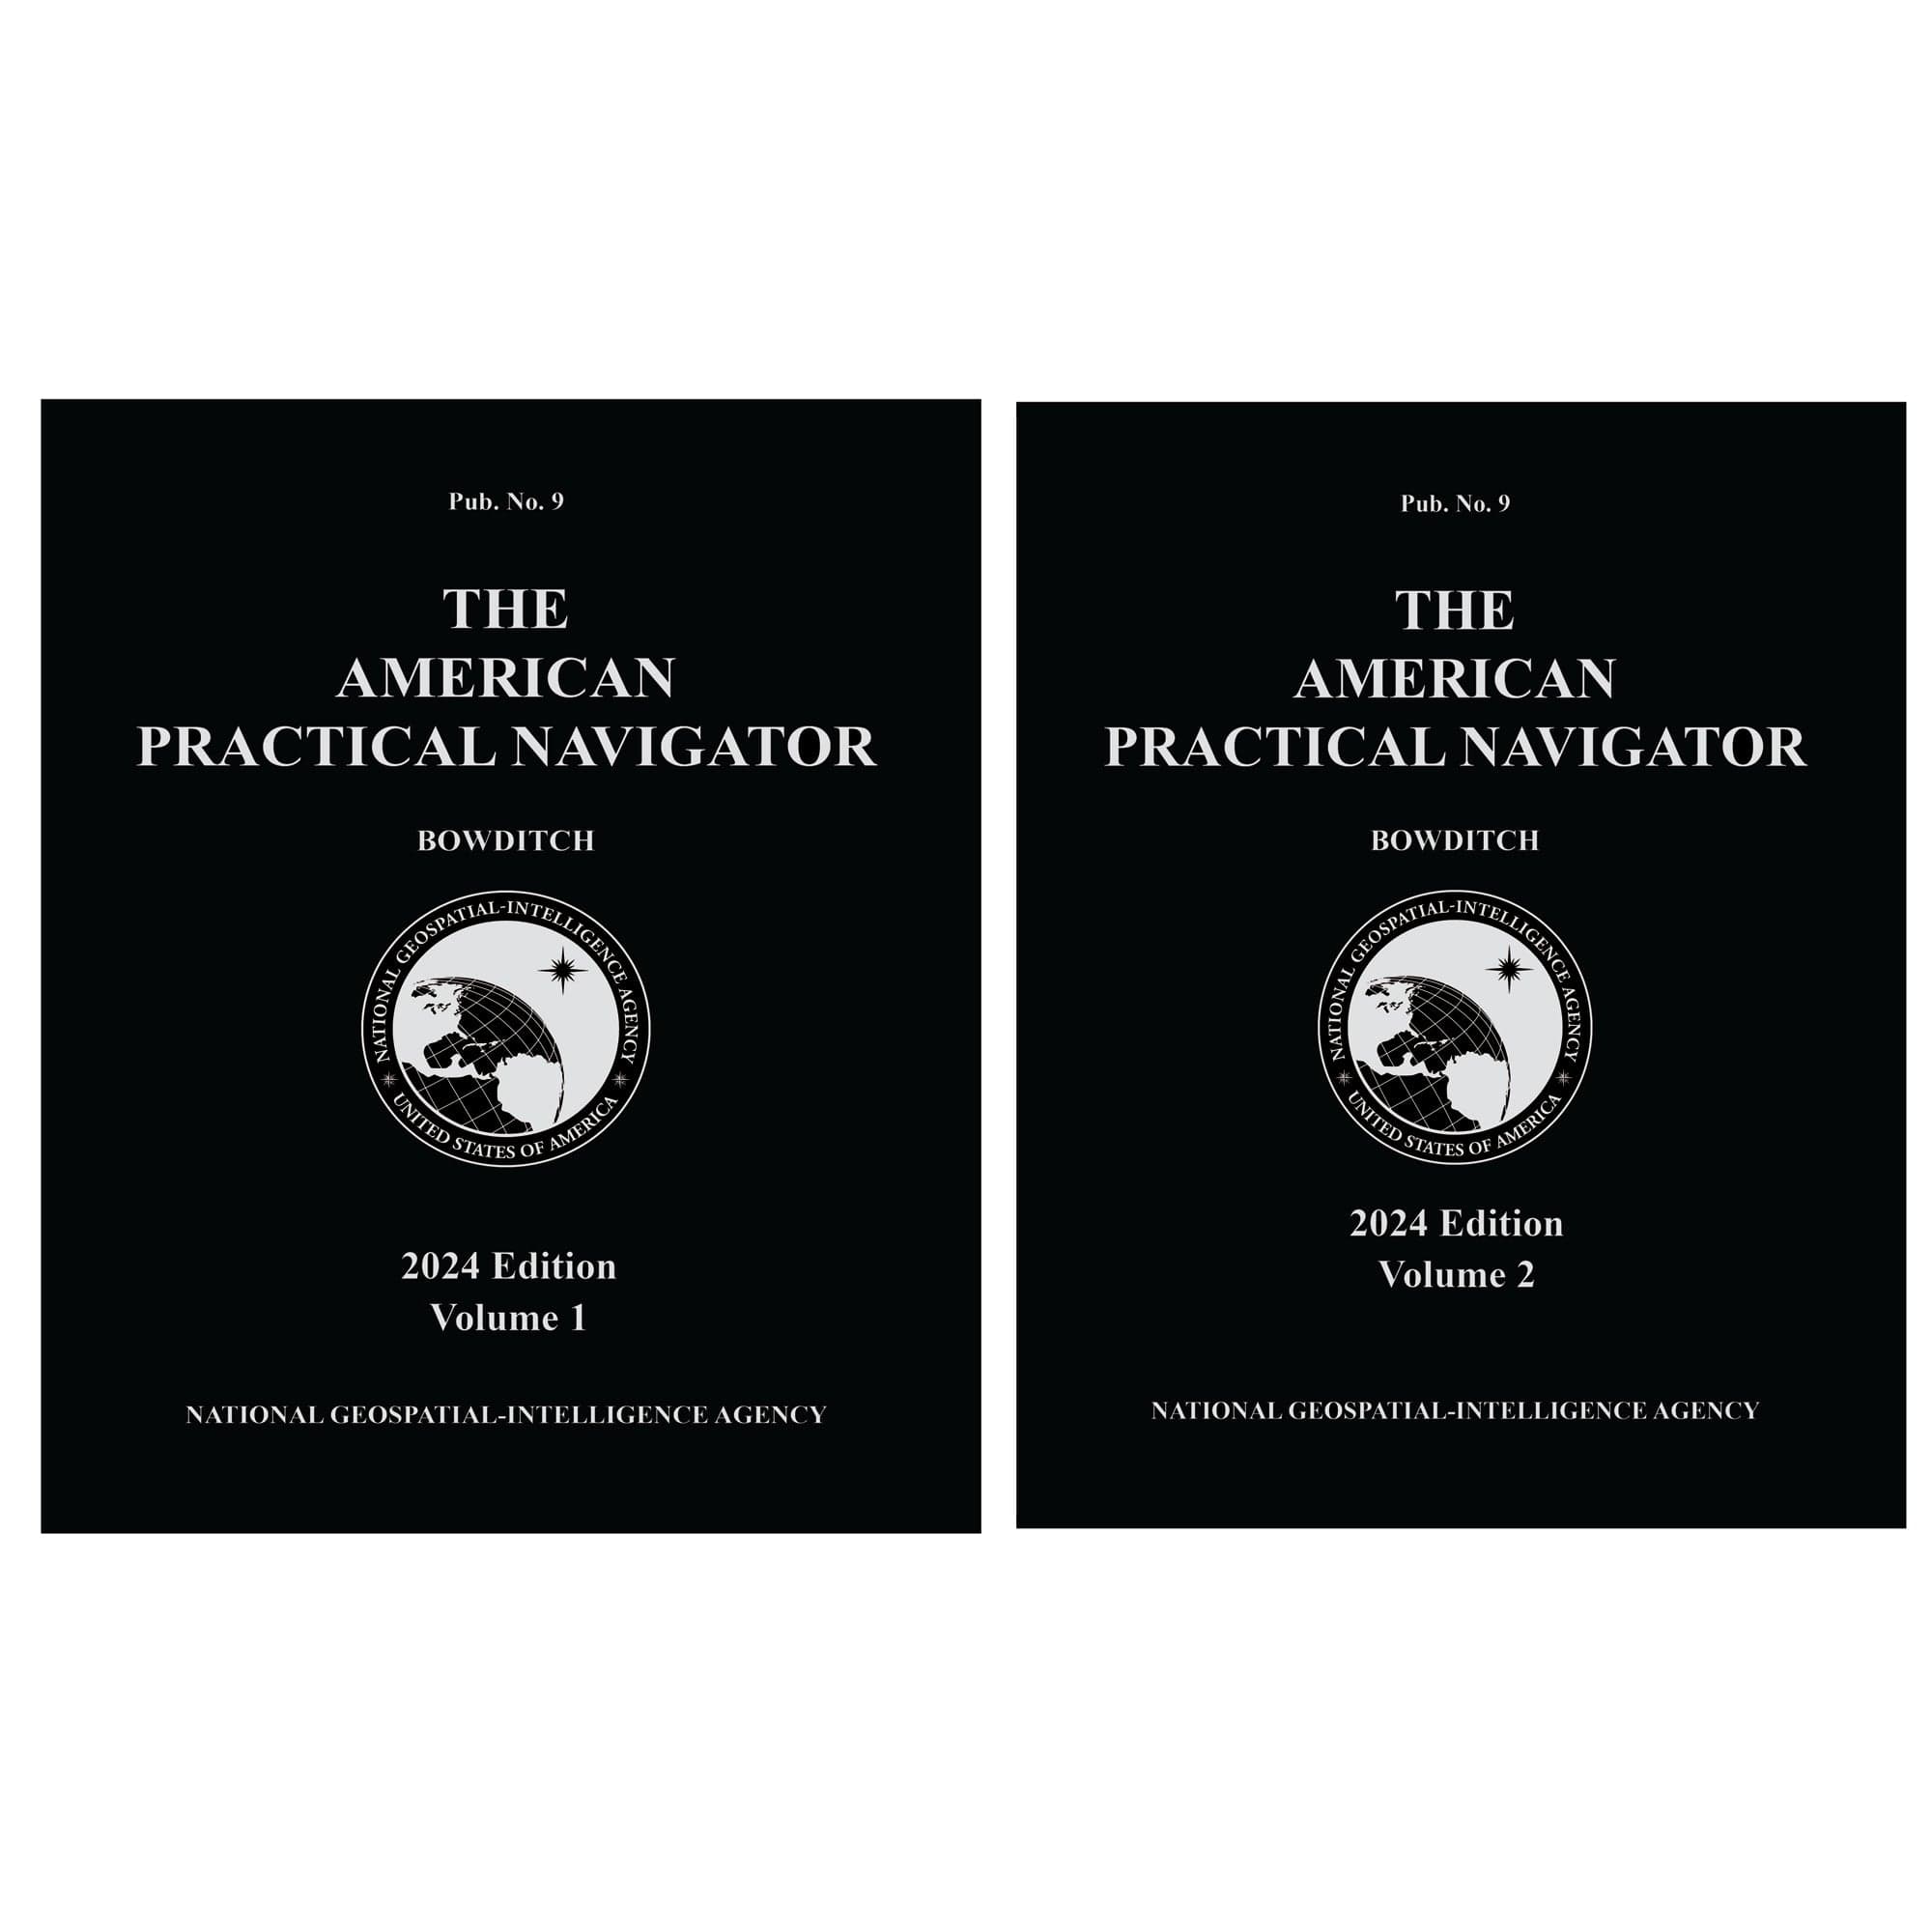 American Practical Navigator (Bowditch) Pub. 9 Volumes 1 & 2 , 2024 Edition